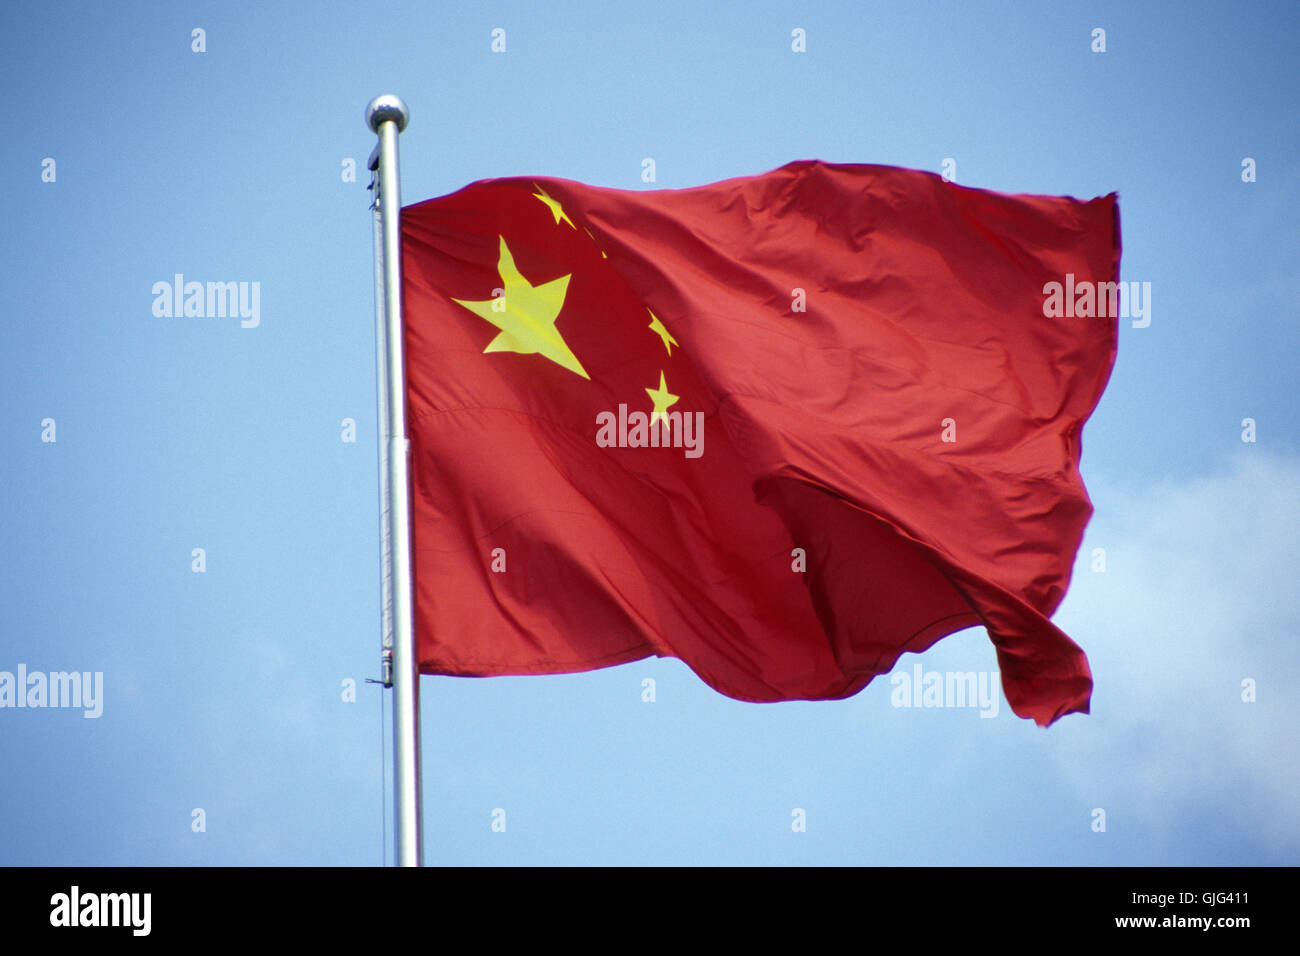 flag emblem communism Stock Photo